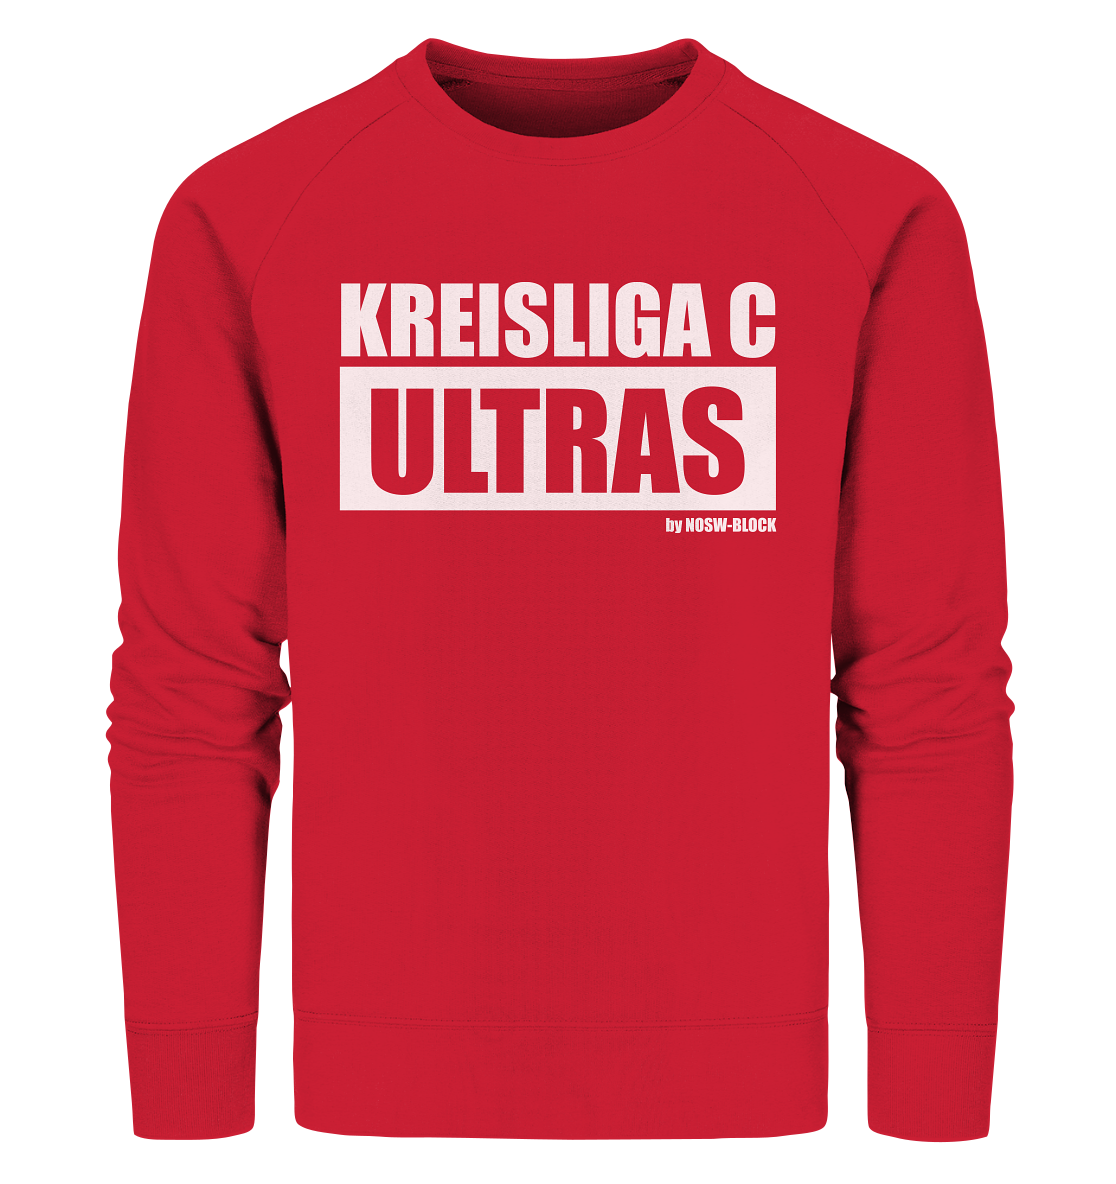 N.O.S.W. BLOCK Ultras Sweater "KREISLIGA C ULTRAS" Männer Organic Sweatshirt rot